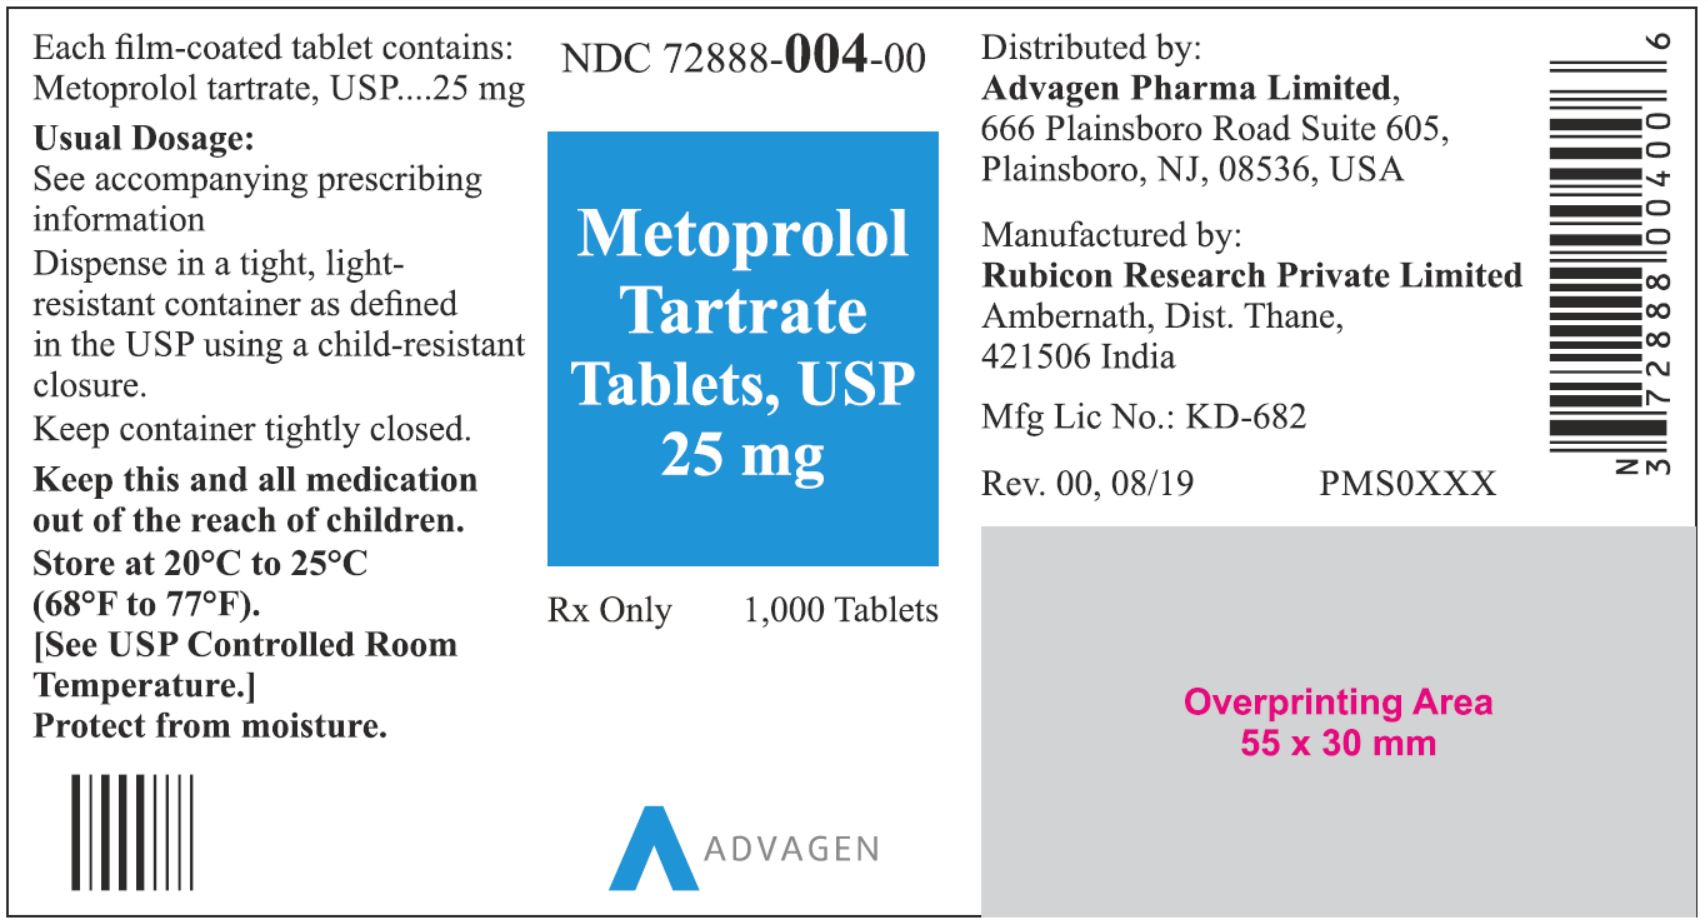 NDC: <a href=/NDC/72888-004-00>72888-004-00</a> - Metoprolol Tartrate Tablets, USP 25 mg - 1000 Tablets